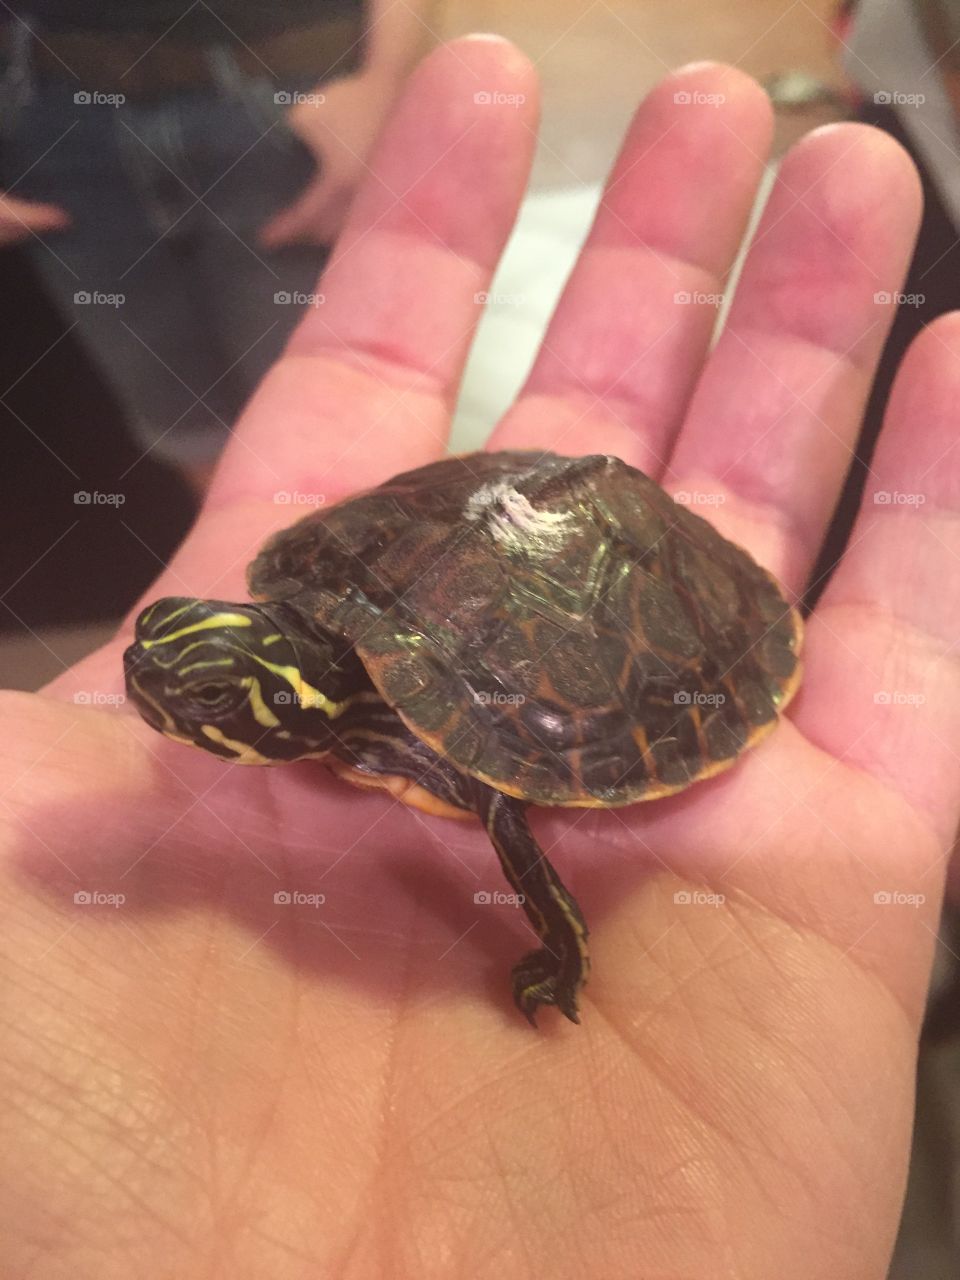 Baby turtle.